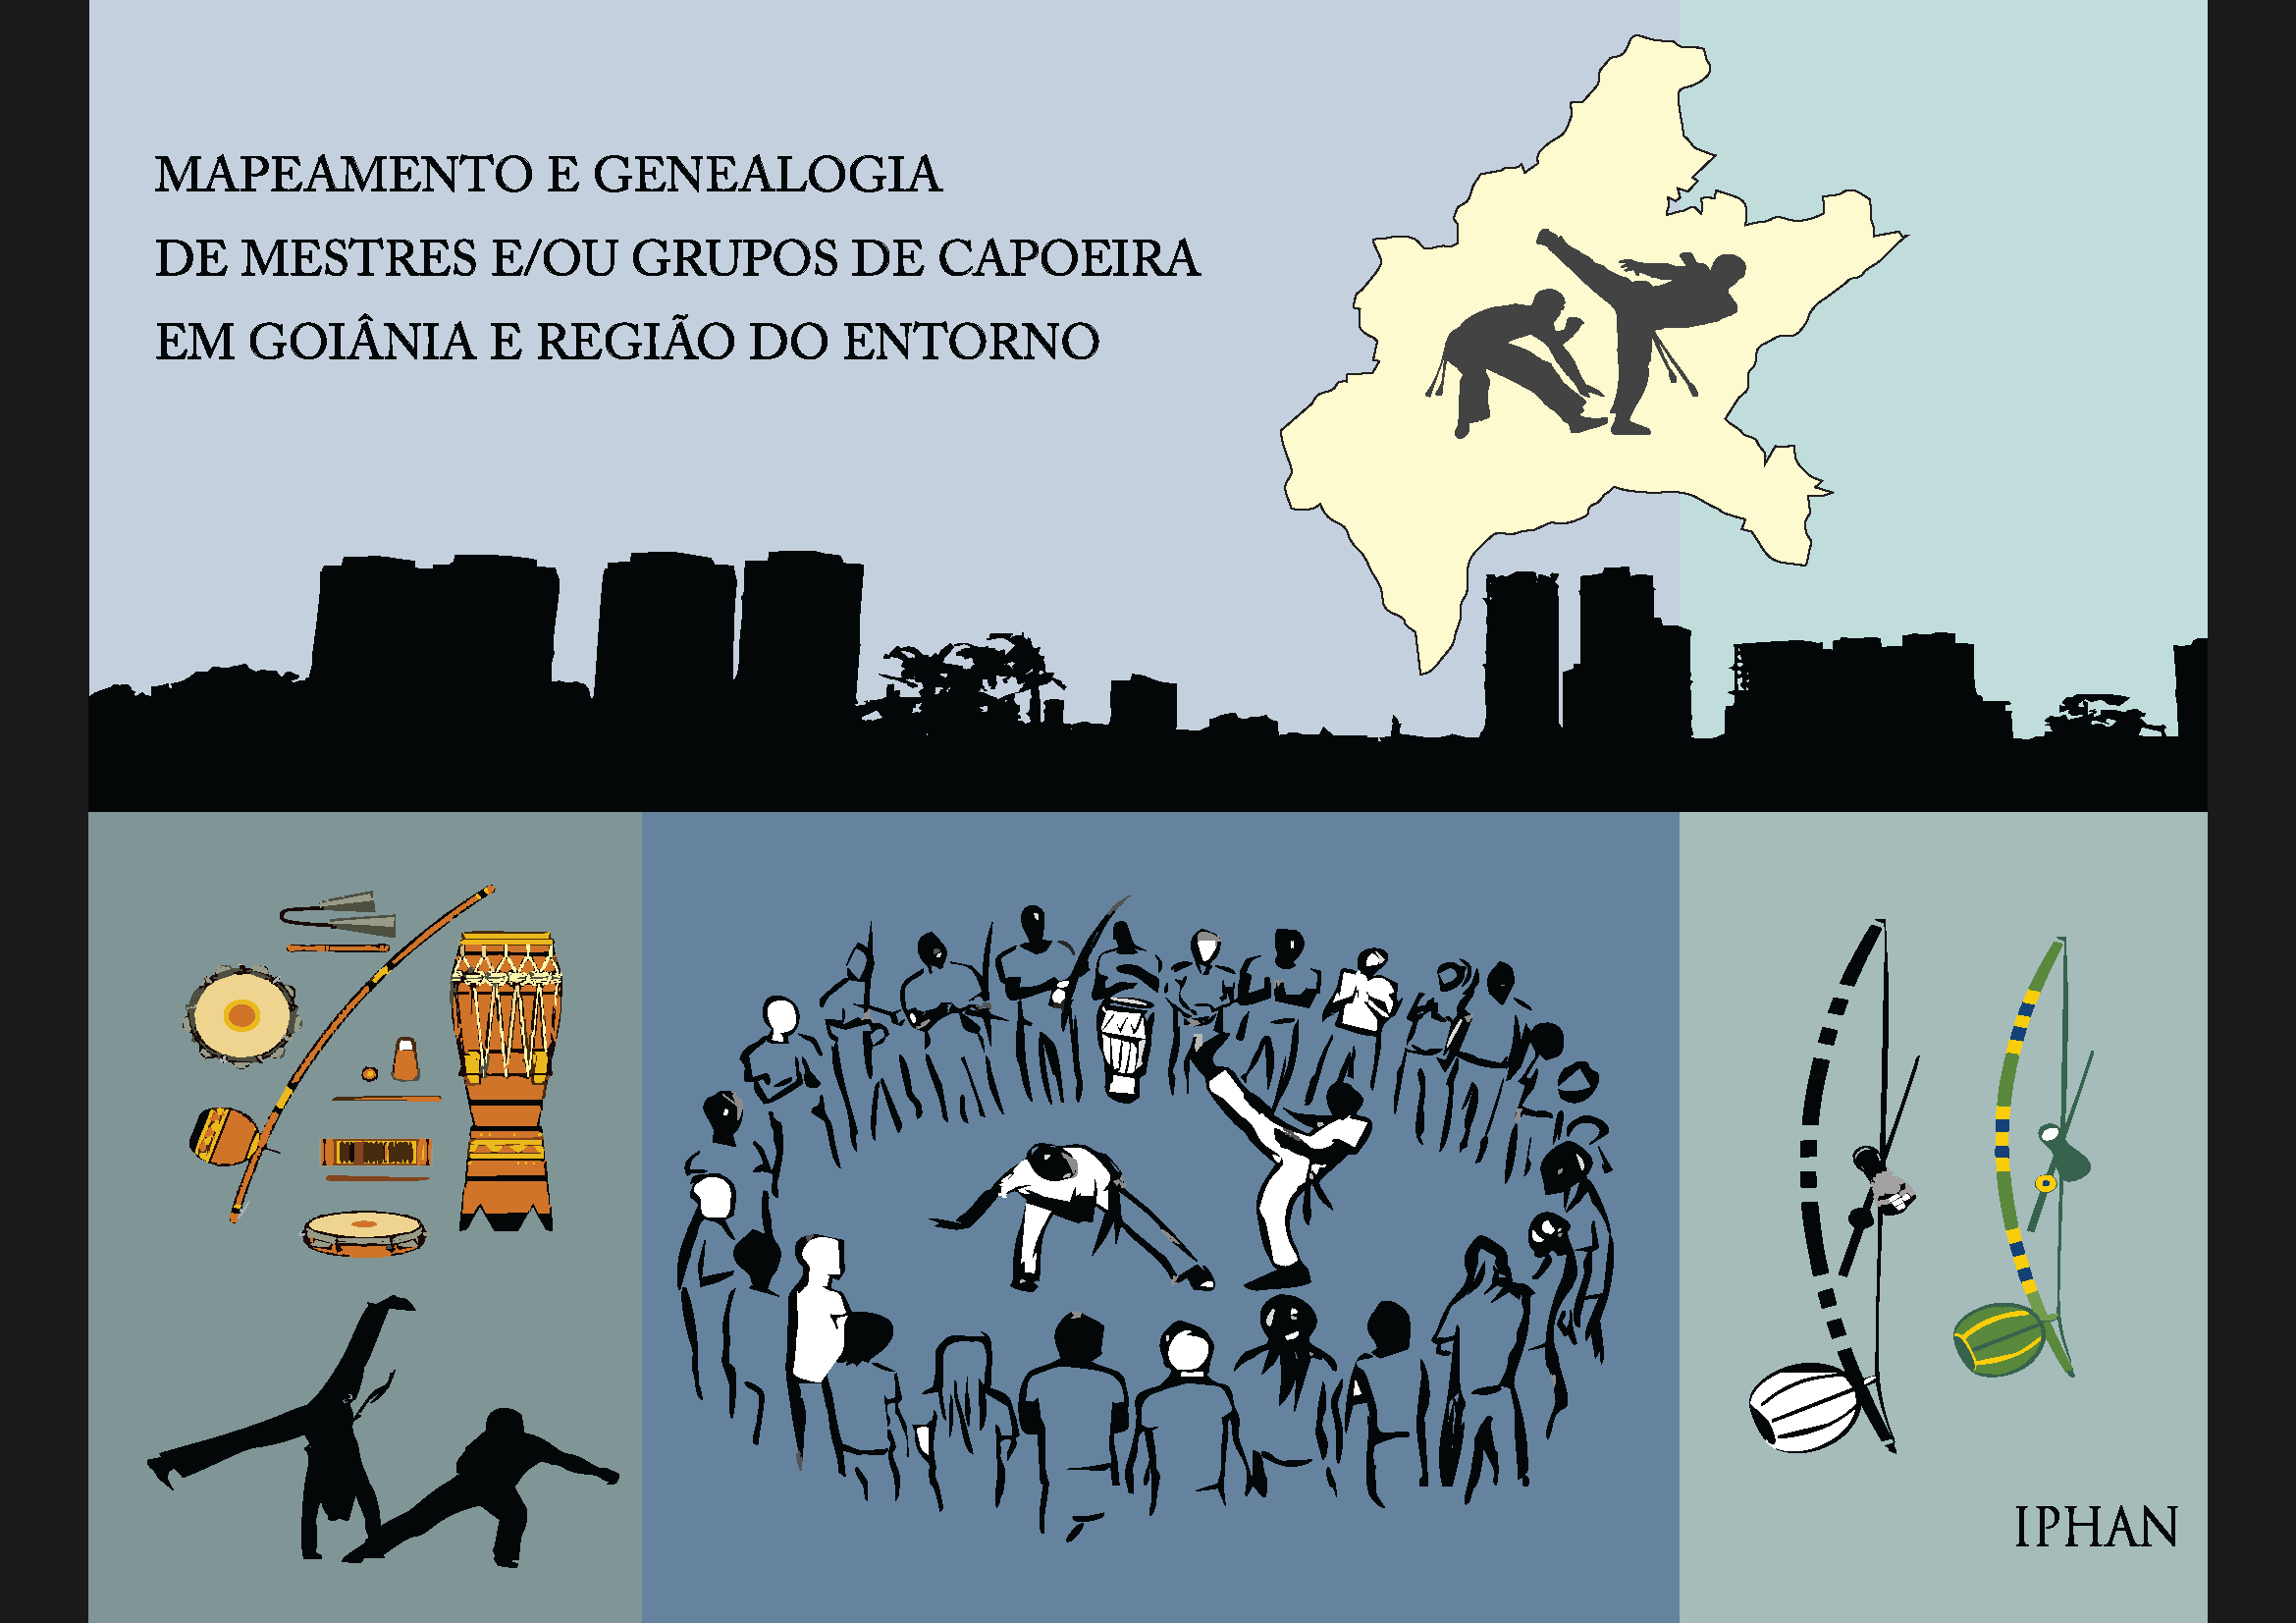 mapeamento_genealogia_capoeira_goiania